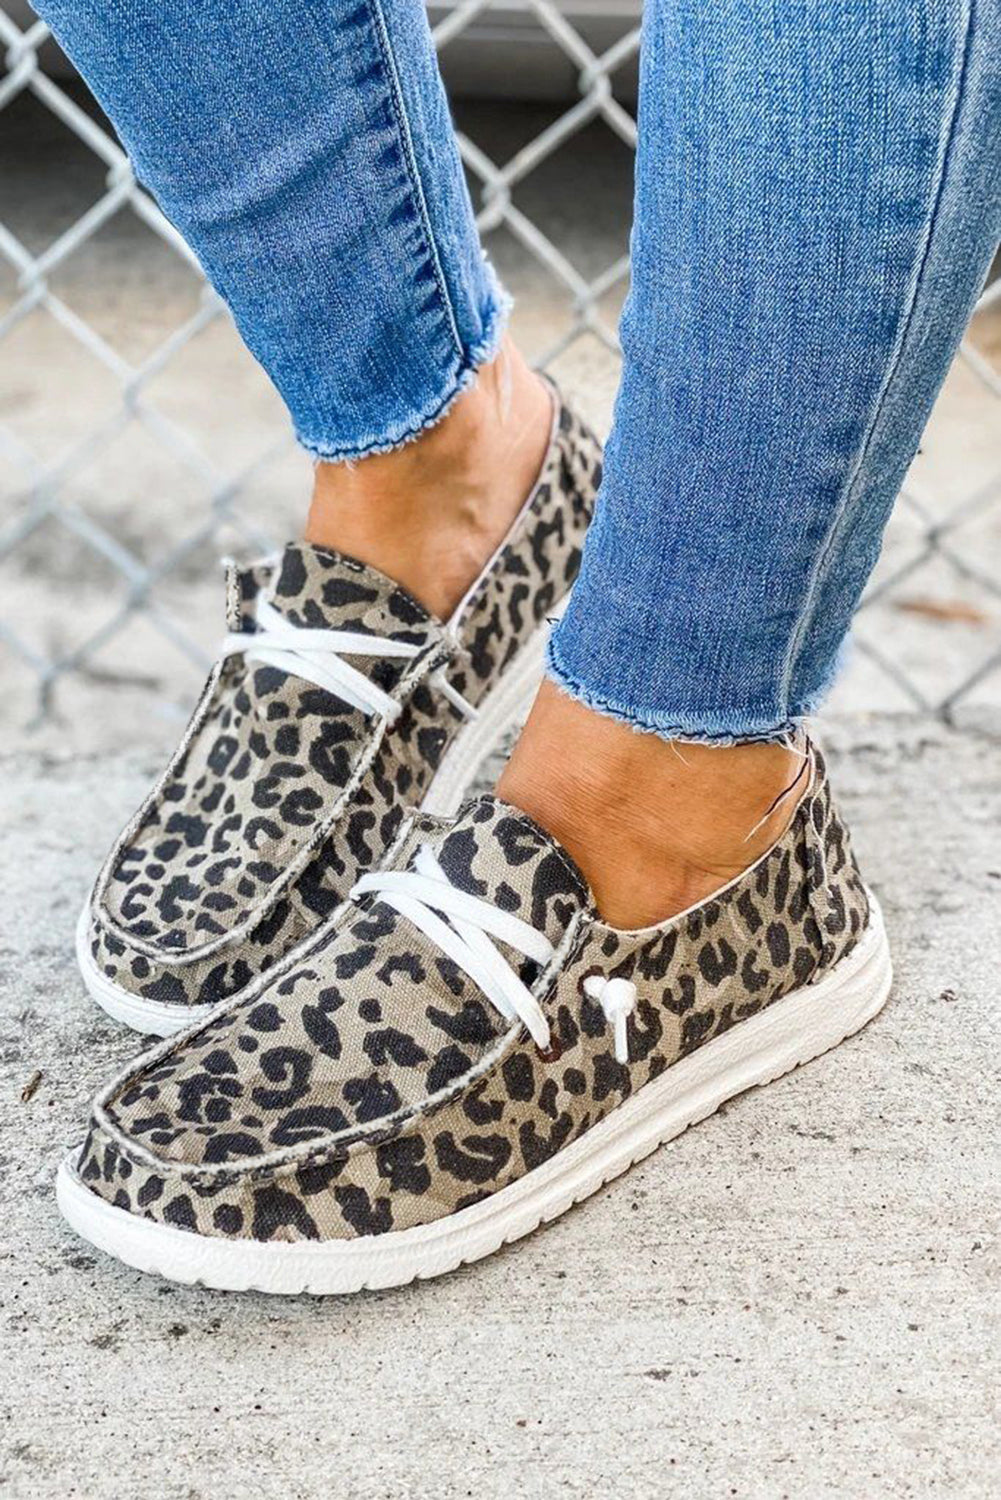 Leopard Slip On Flat Canvas Shoes Item NO.: 1211